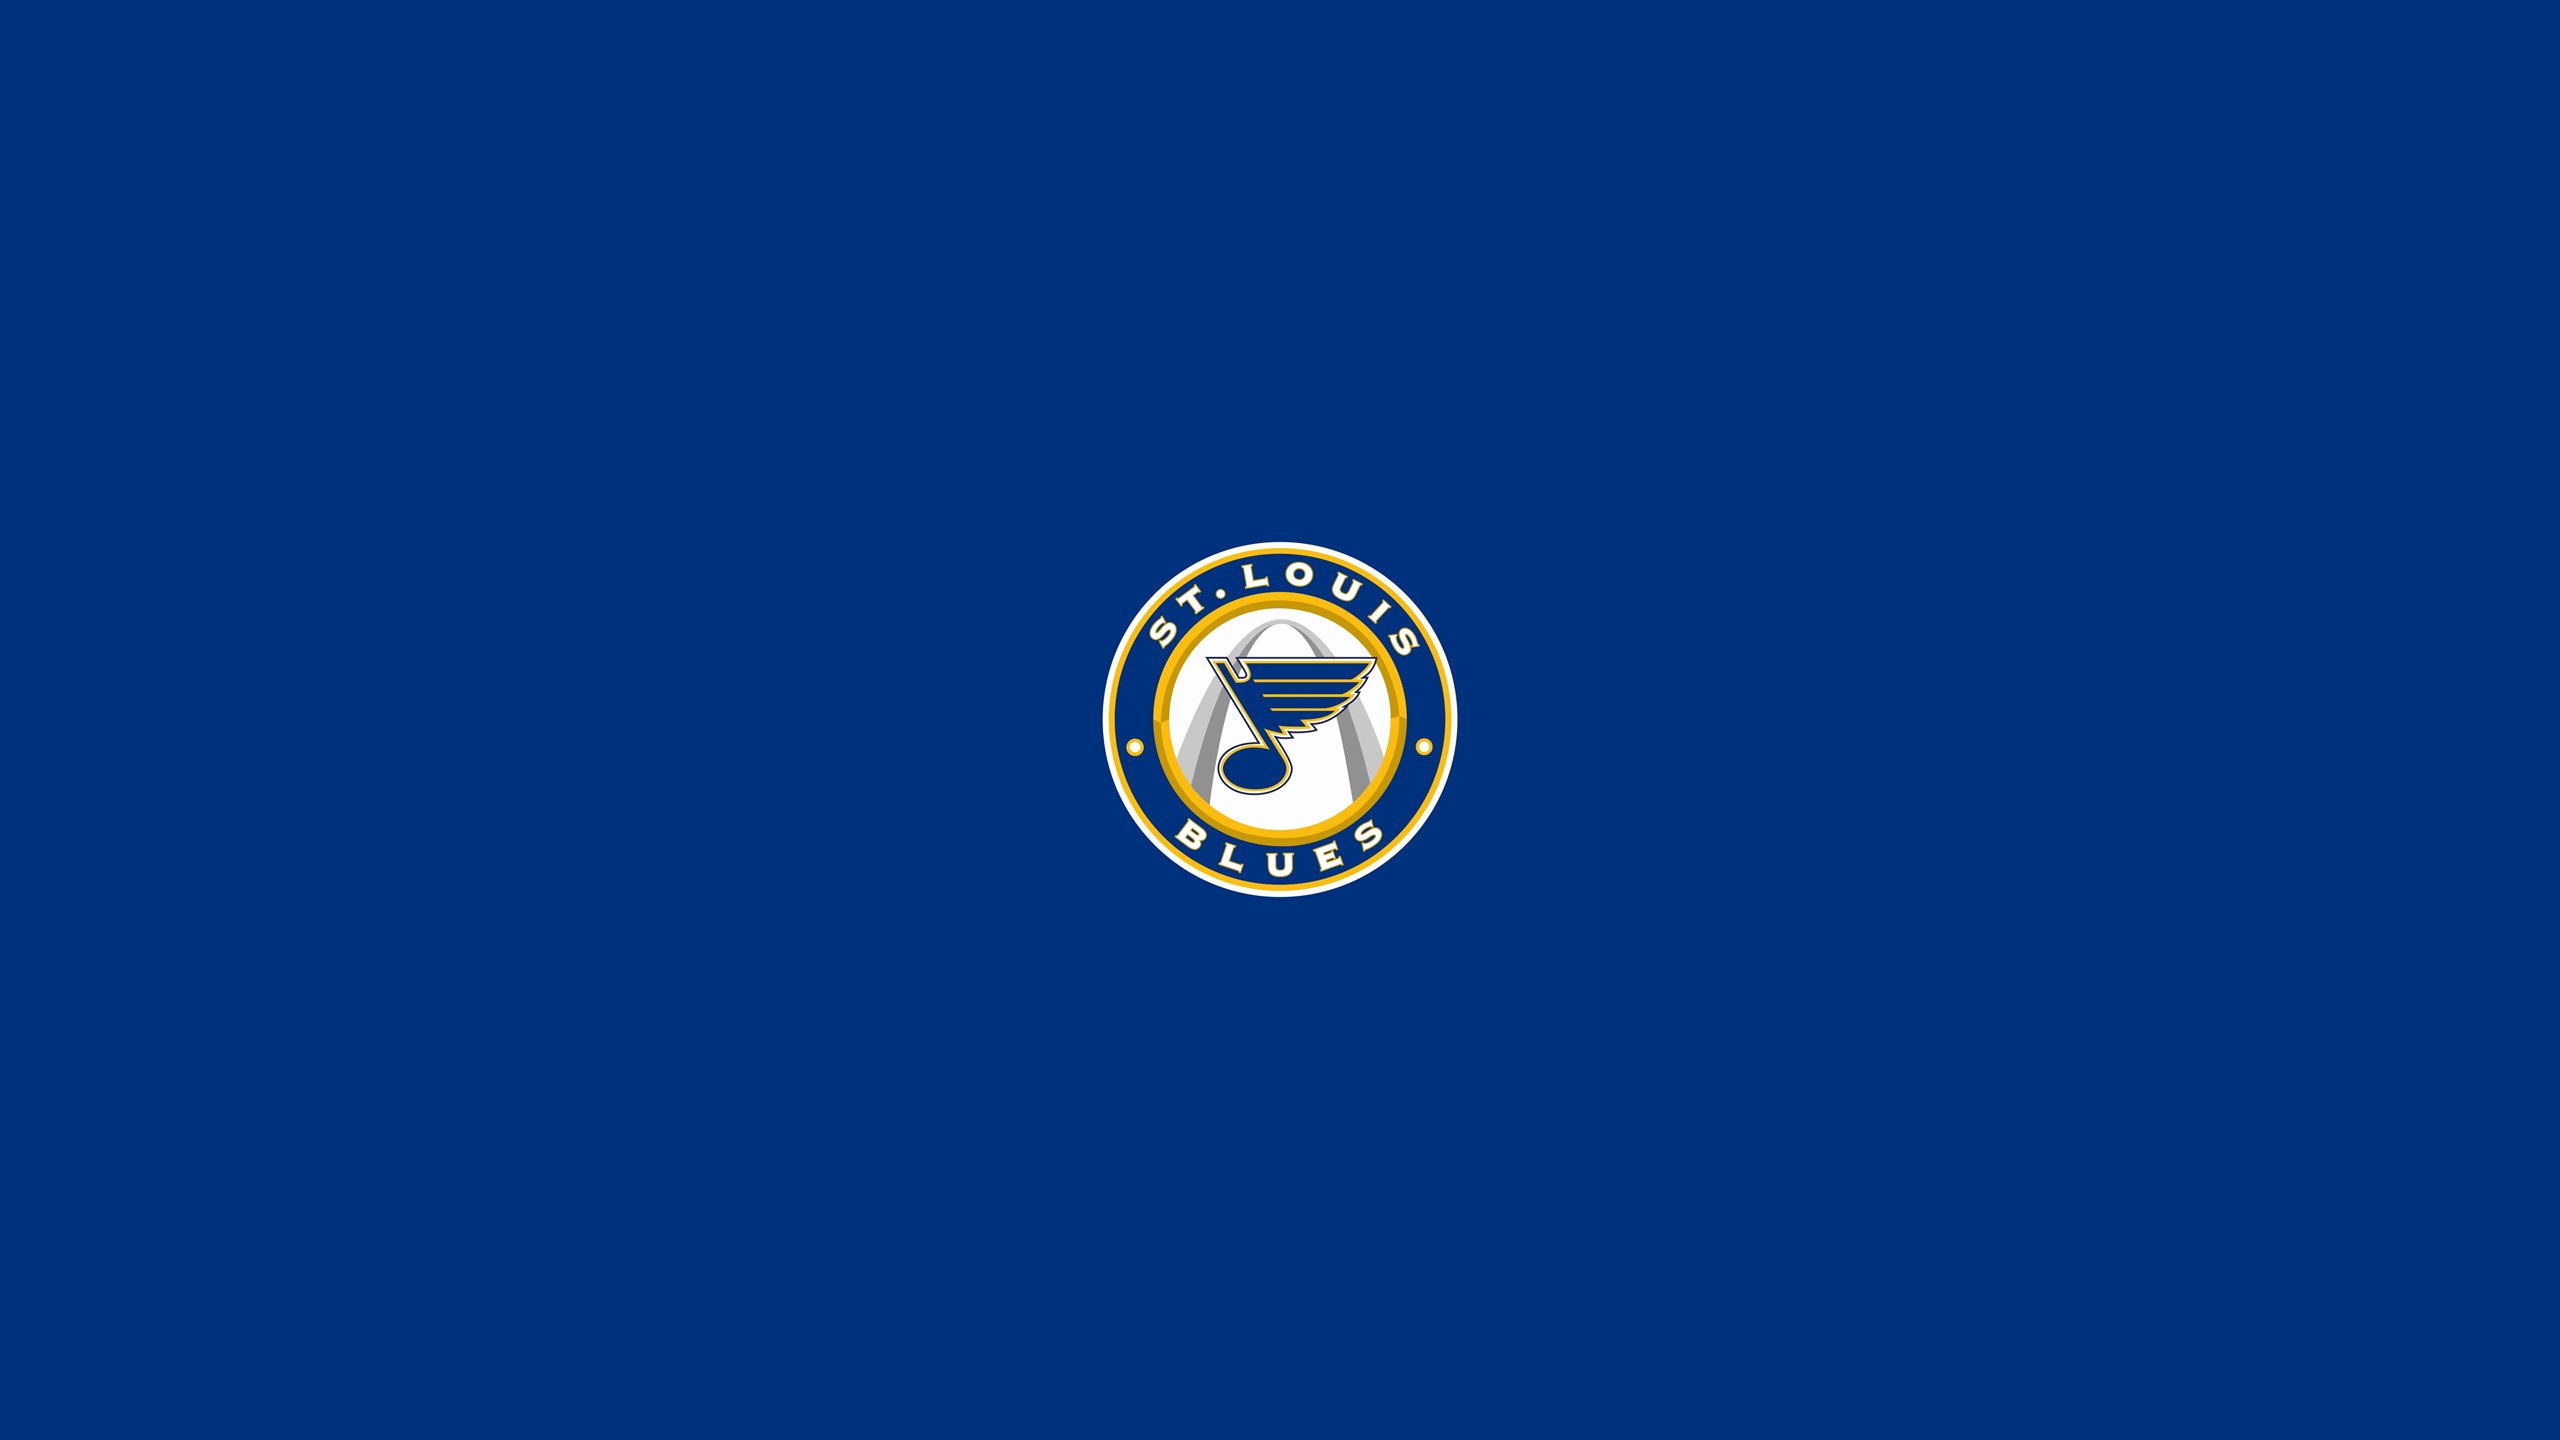 St Louis Blues Hockey Nhl Wallpaper Background